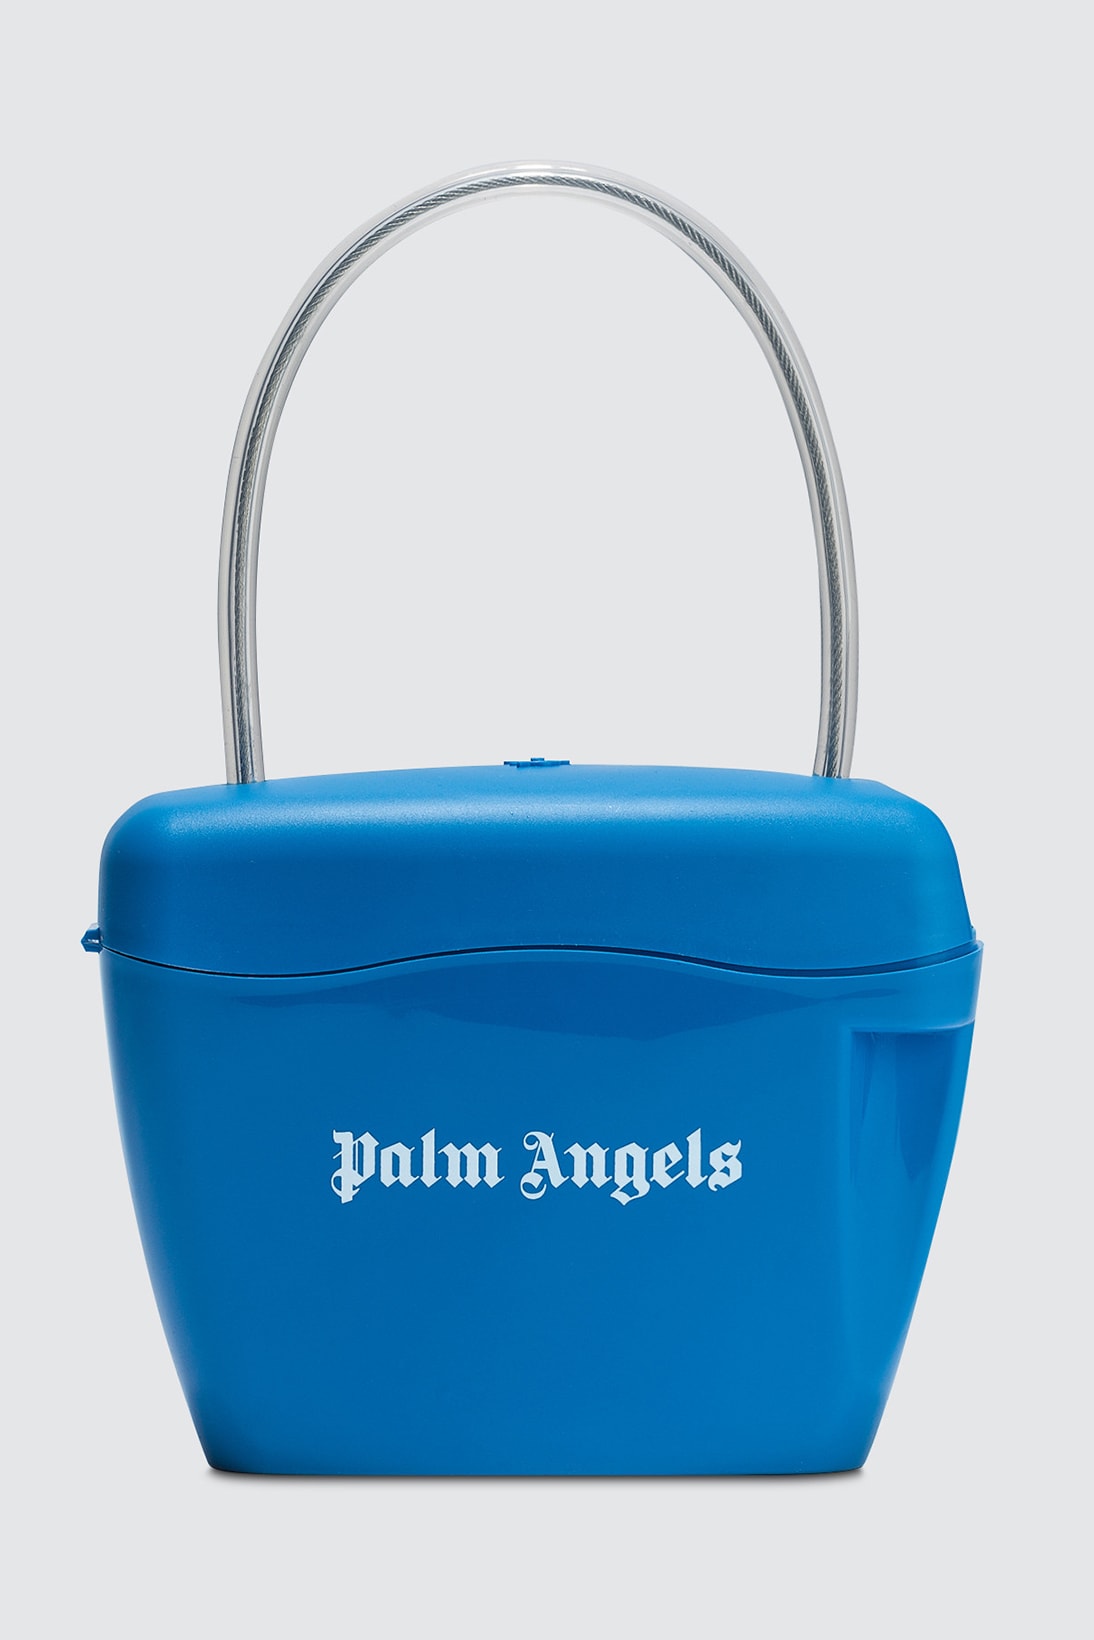 Palm Angels Plastic Padlock Bag Red Black White Yellow Blue Green Orange Handbag